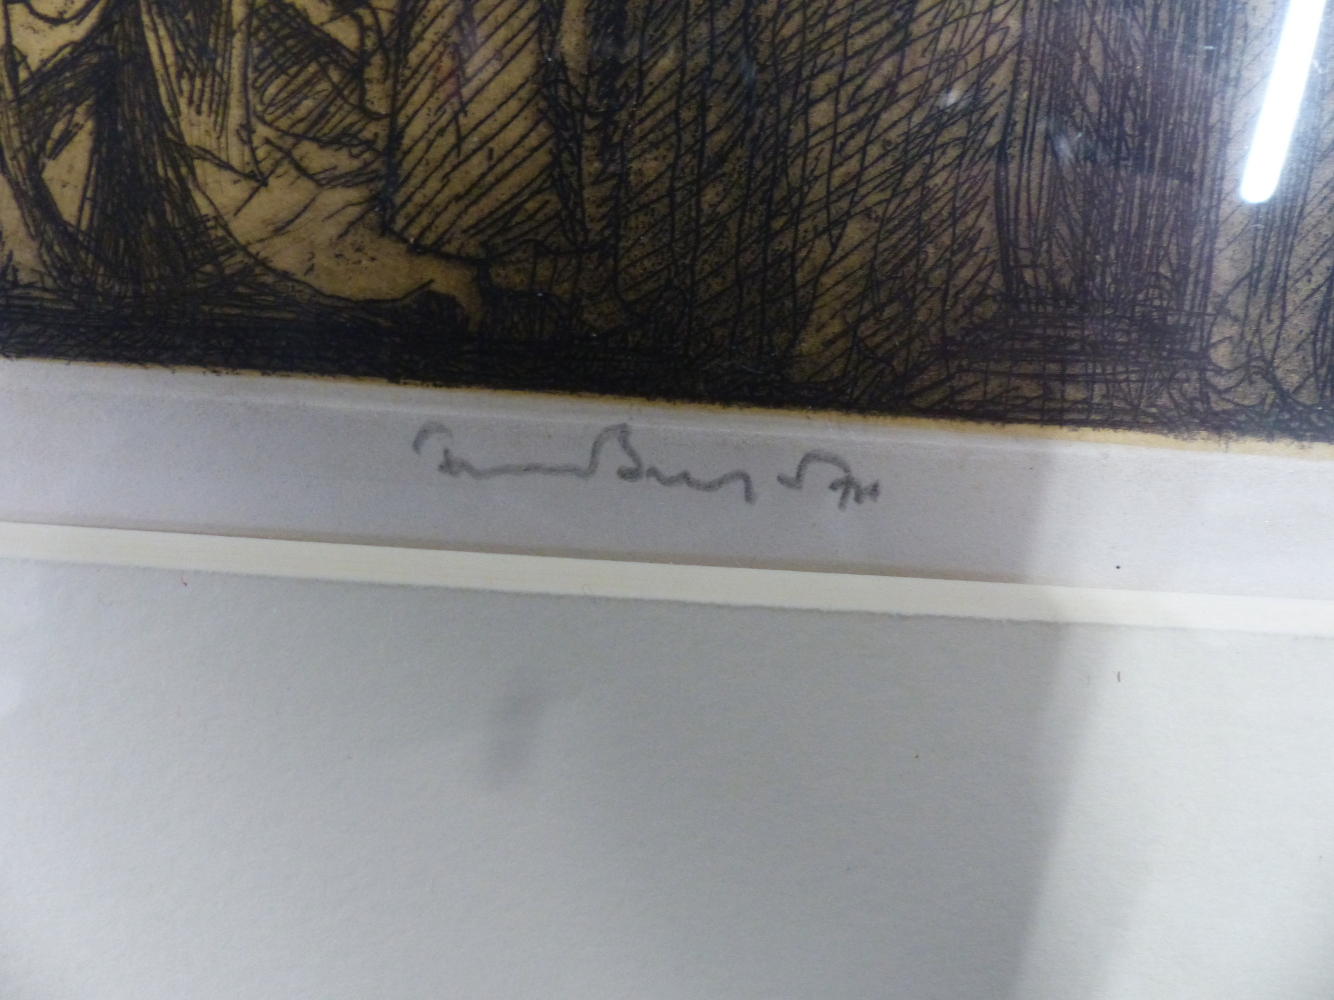 SIR FRANK BRANGWYN (1867-1956) ARR, THE DEATH OF SAINT MILBURGA, SIGNED IN PENCIL, ETCHING, 24 x - Image 4 of 4